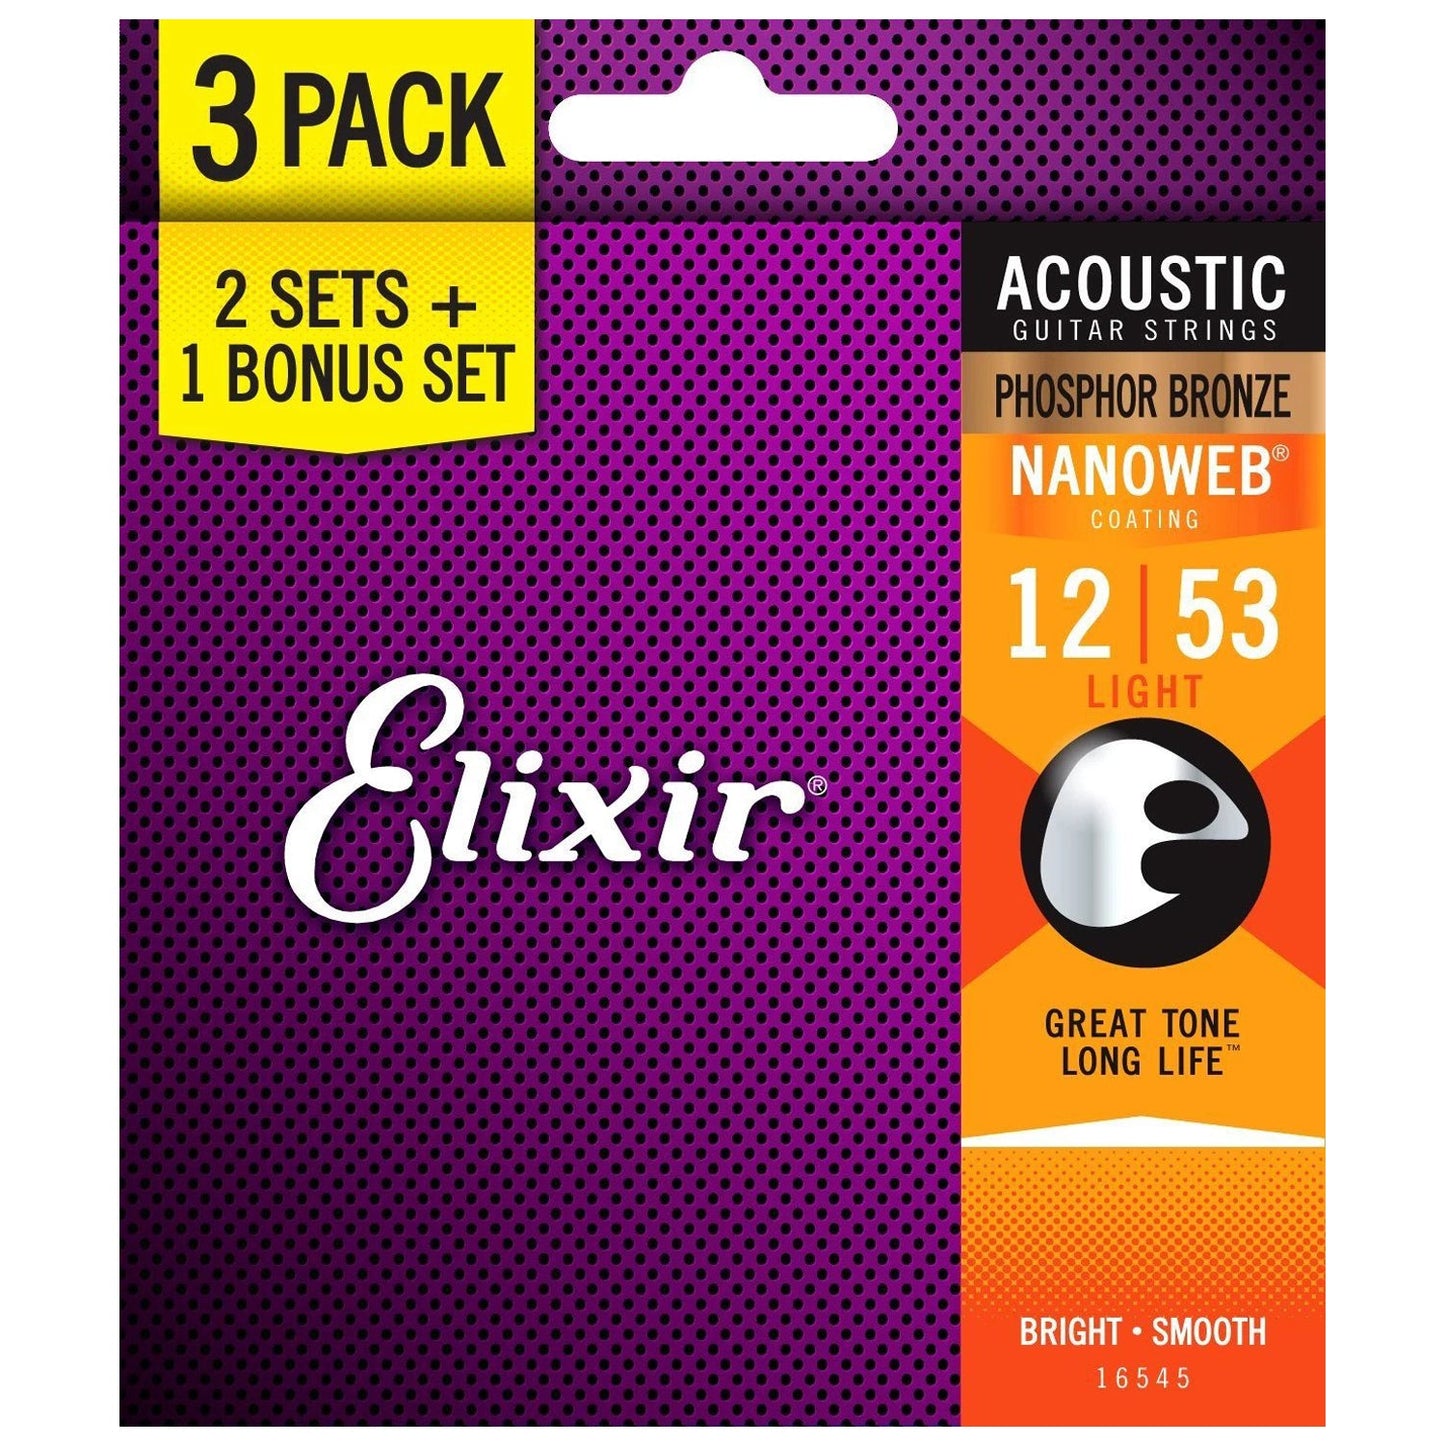 Elixir Acoustic Phosphor Bronze Acoustic Guitar Strings with Nanoweb Coating - Light (12 16 24 32 42 53) 3-Pack